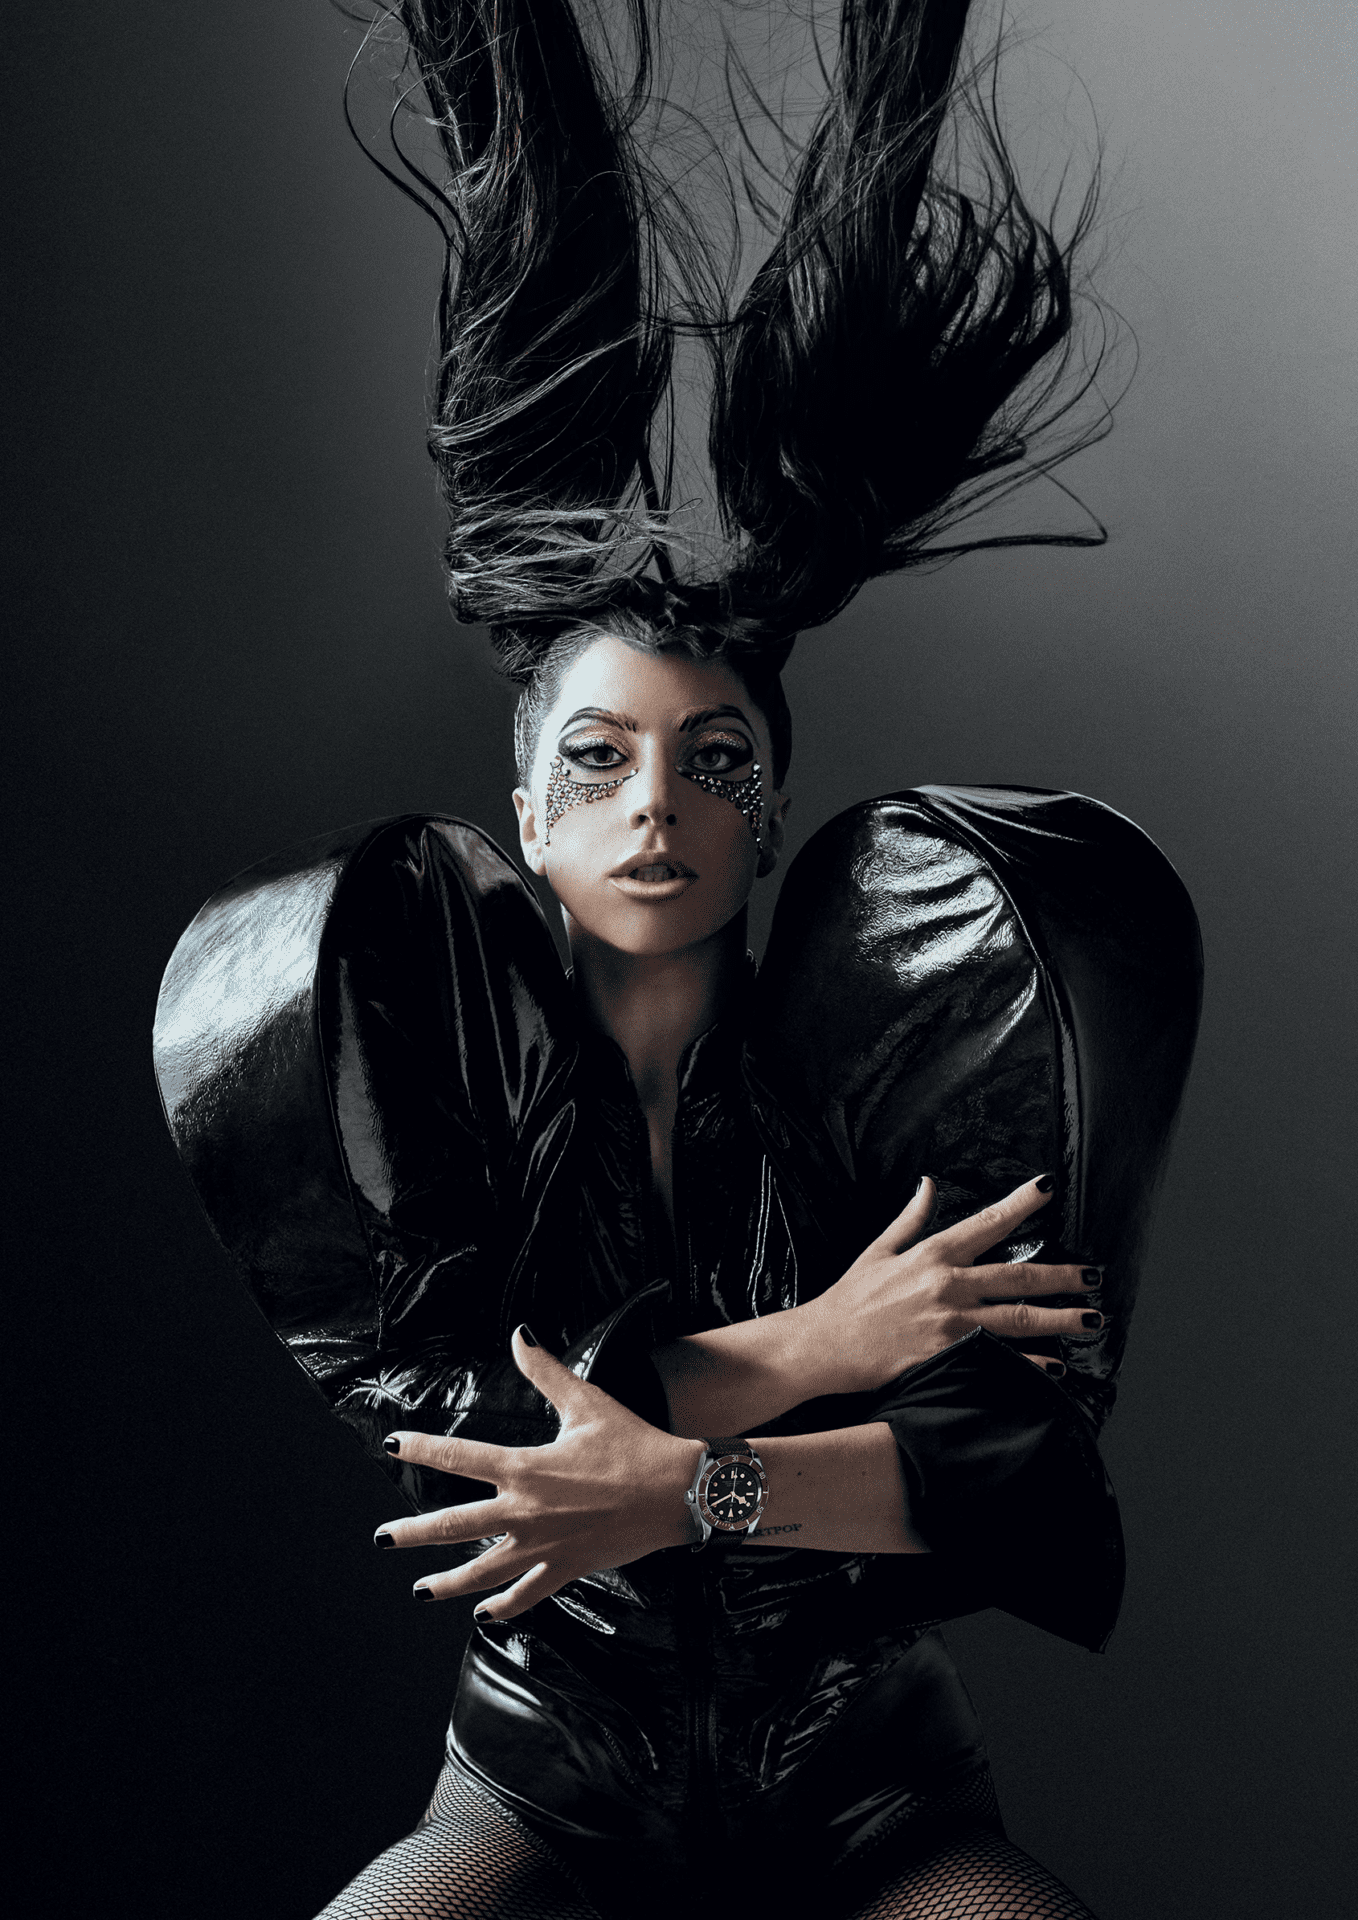 NEWS: Will the world go Gaga for Tudor’s new global ambassador?